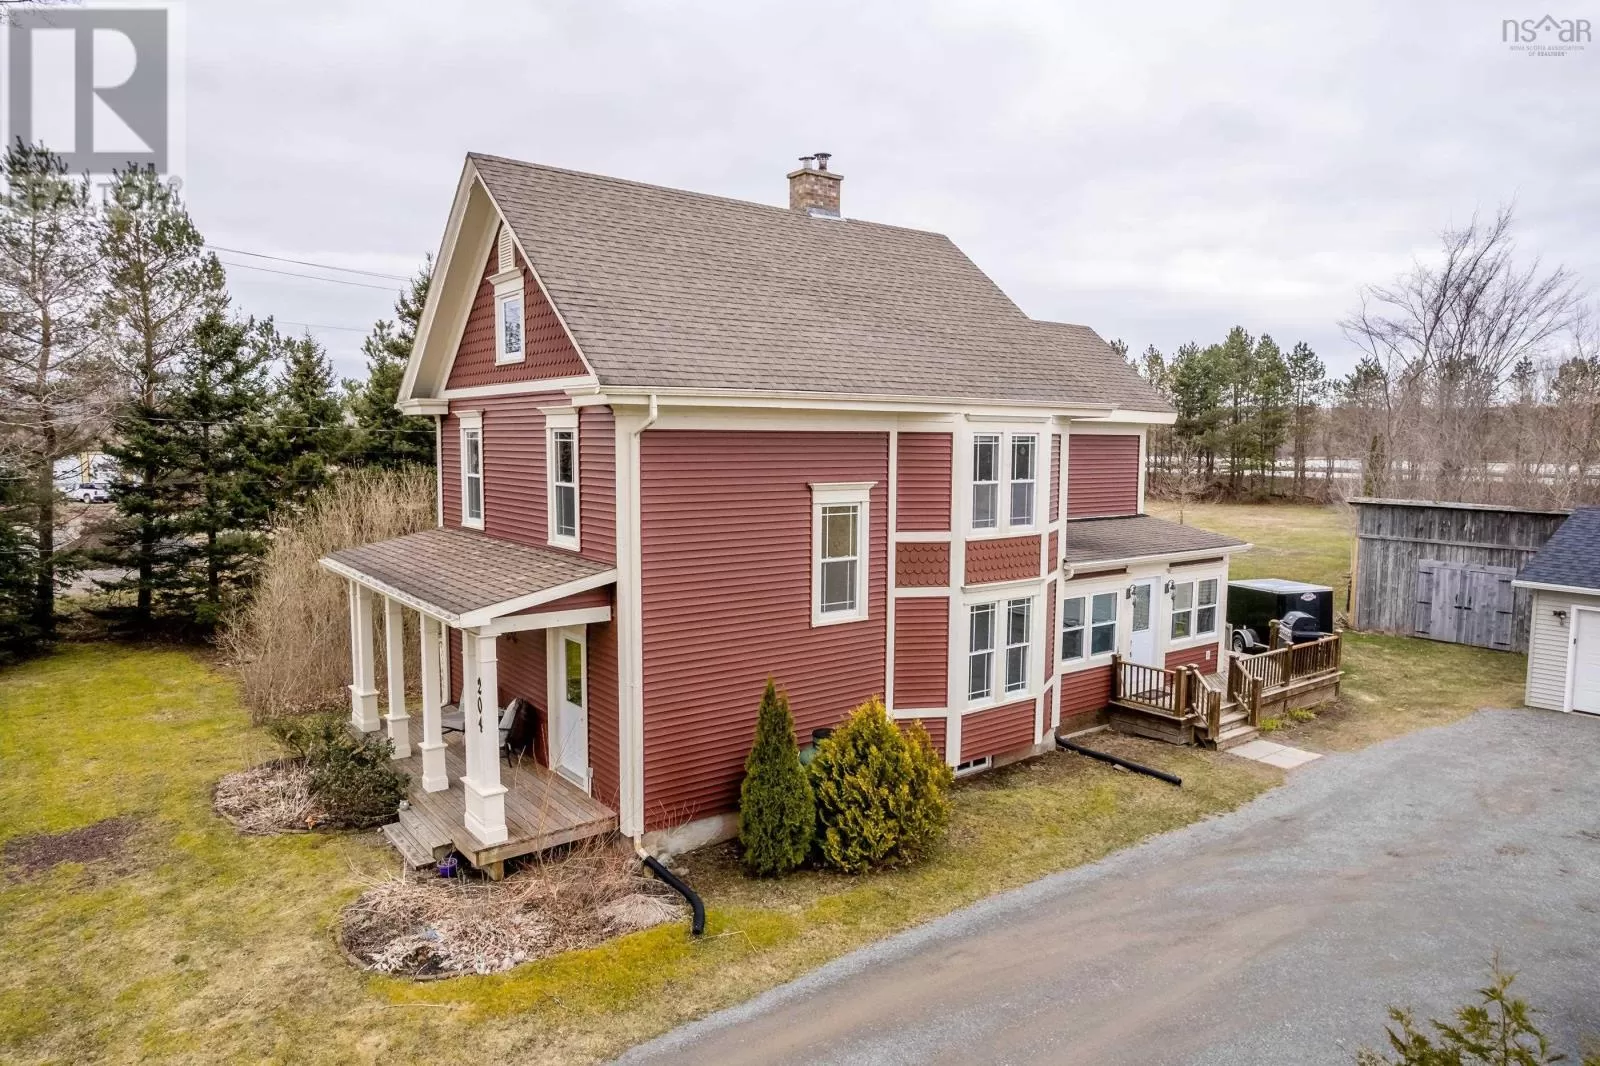 House for rent: 204 Main Street, Berwick, Nova Scotia B0P 1E0